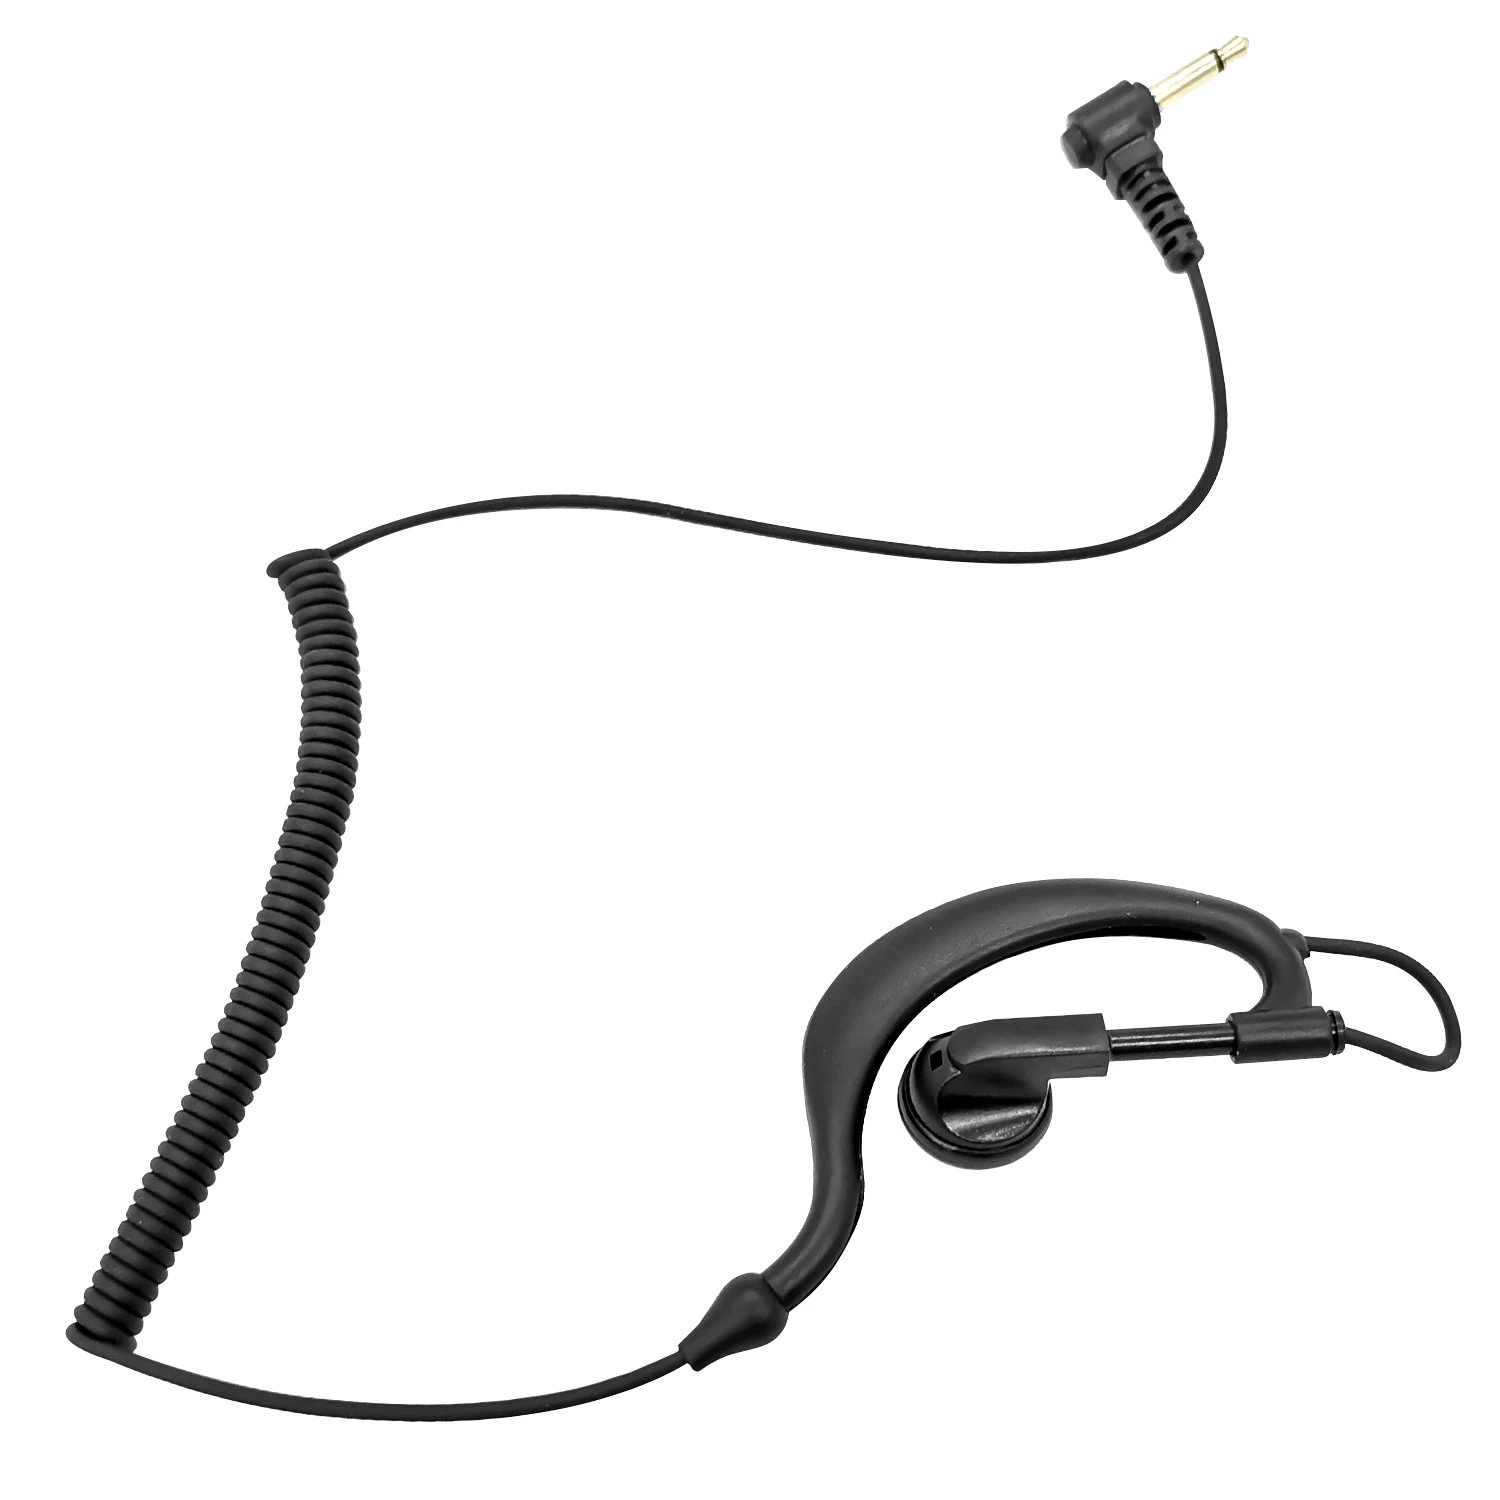 3.5mm Police Receive/Listen Only Earpiece G Shape Soft Ear Hook Surveillance Headset for Two Way Radio, Radio Speaker Mic